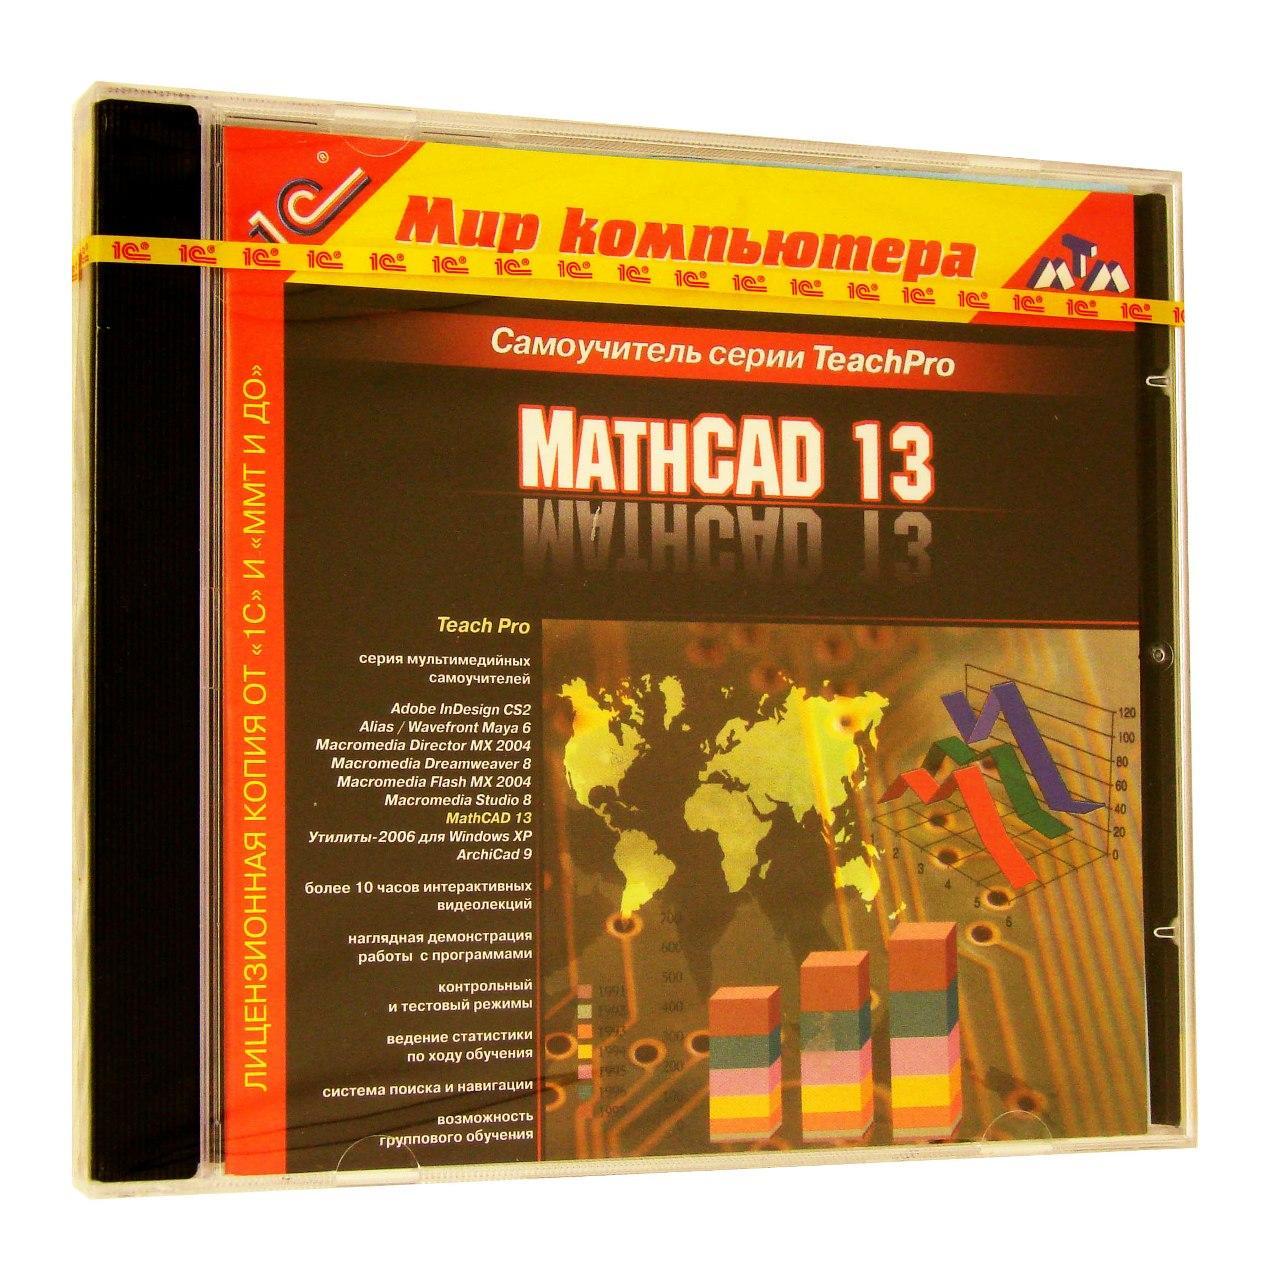 Mathcad 13 TeachPro (PC)